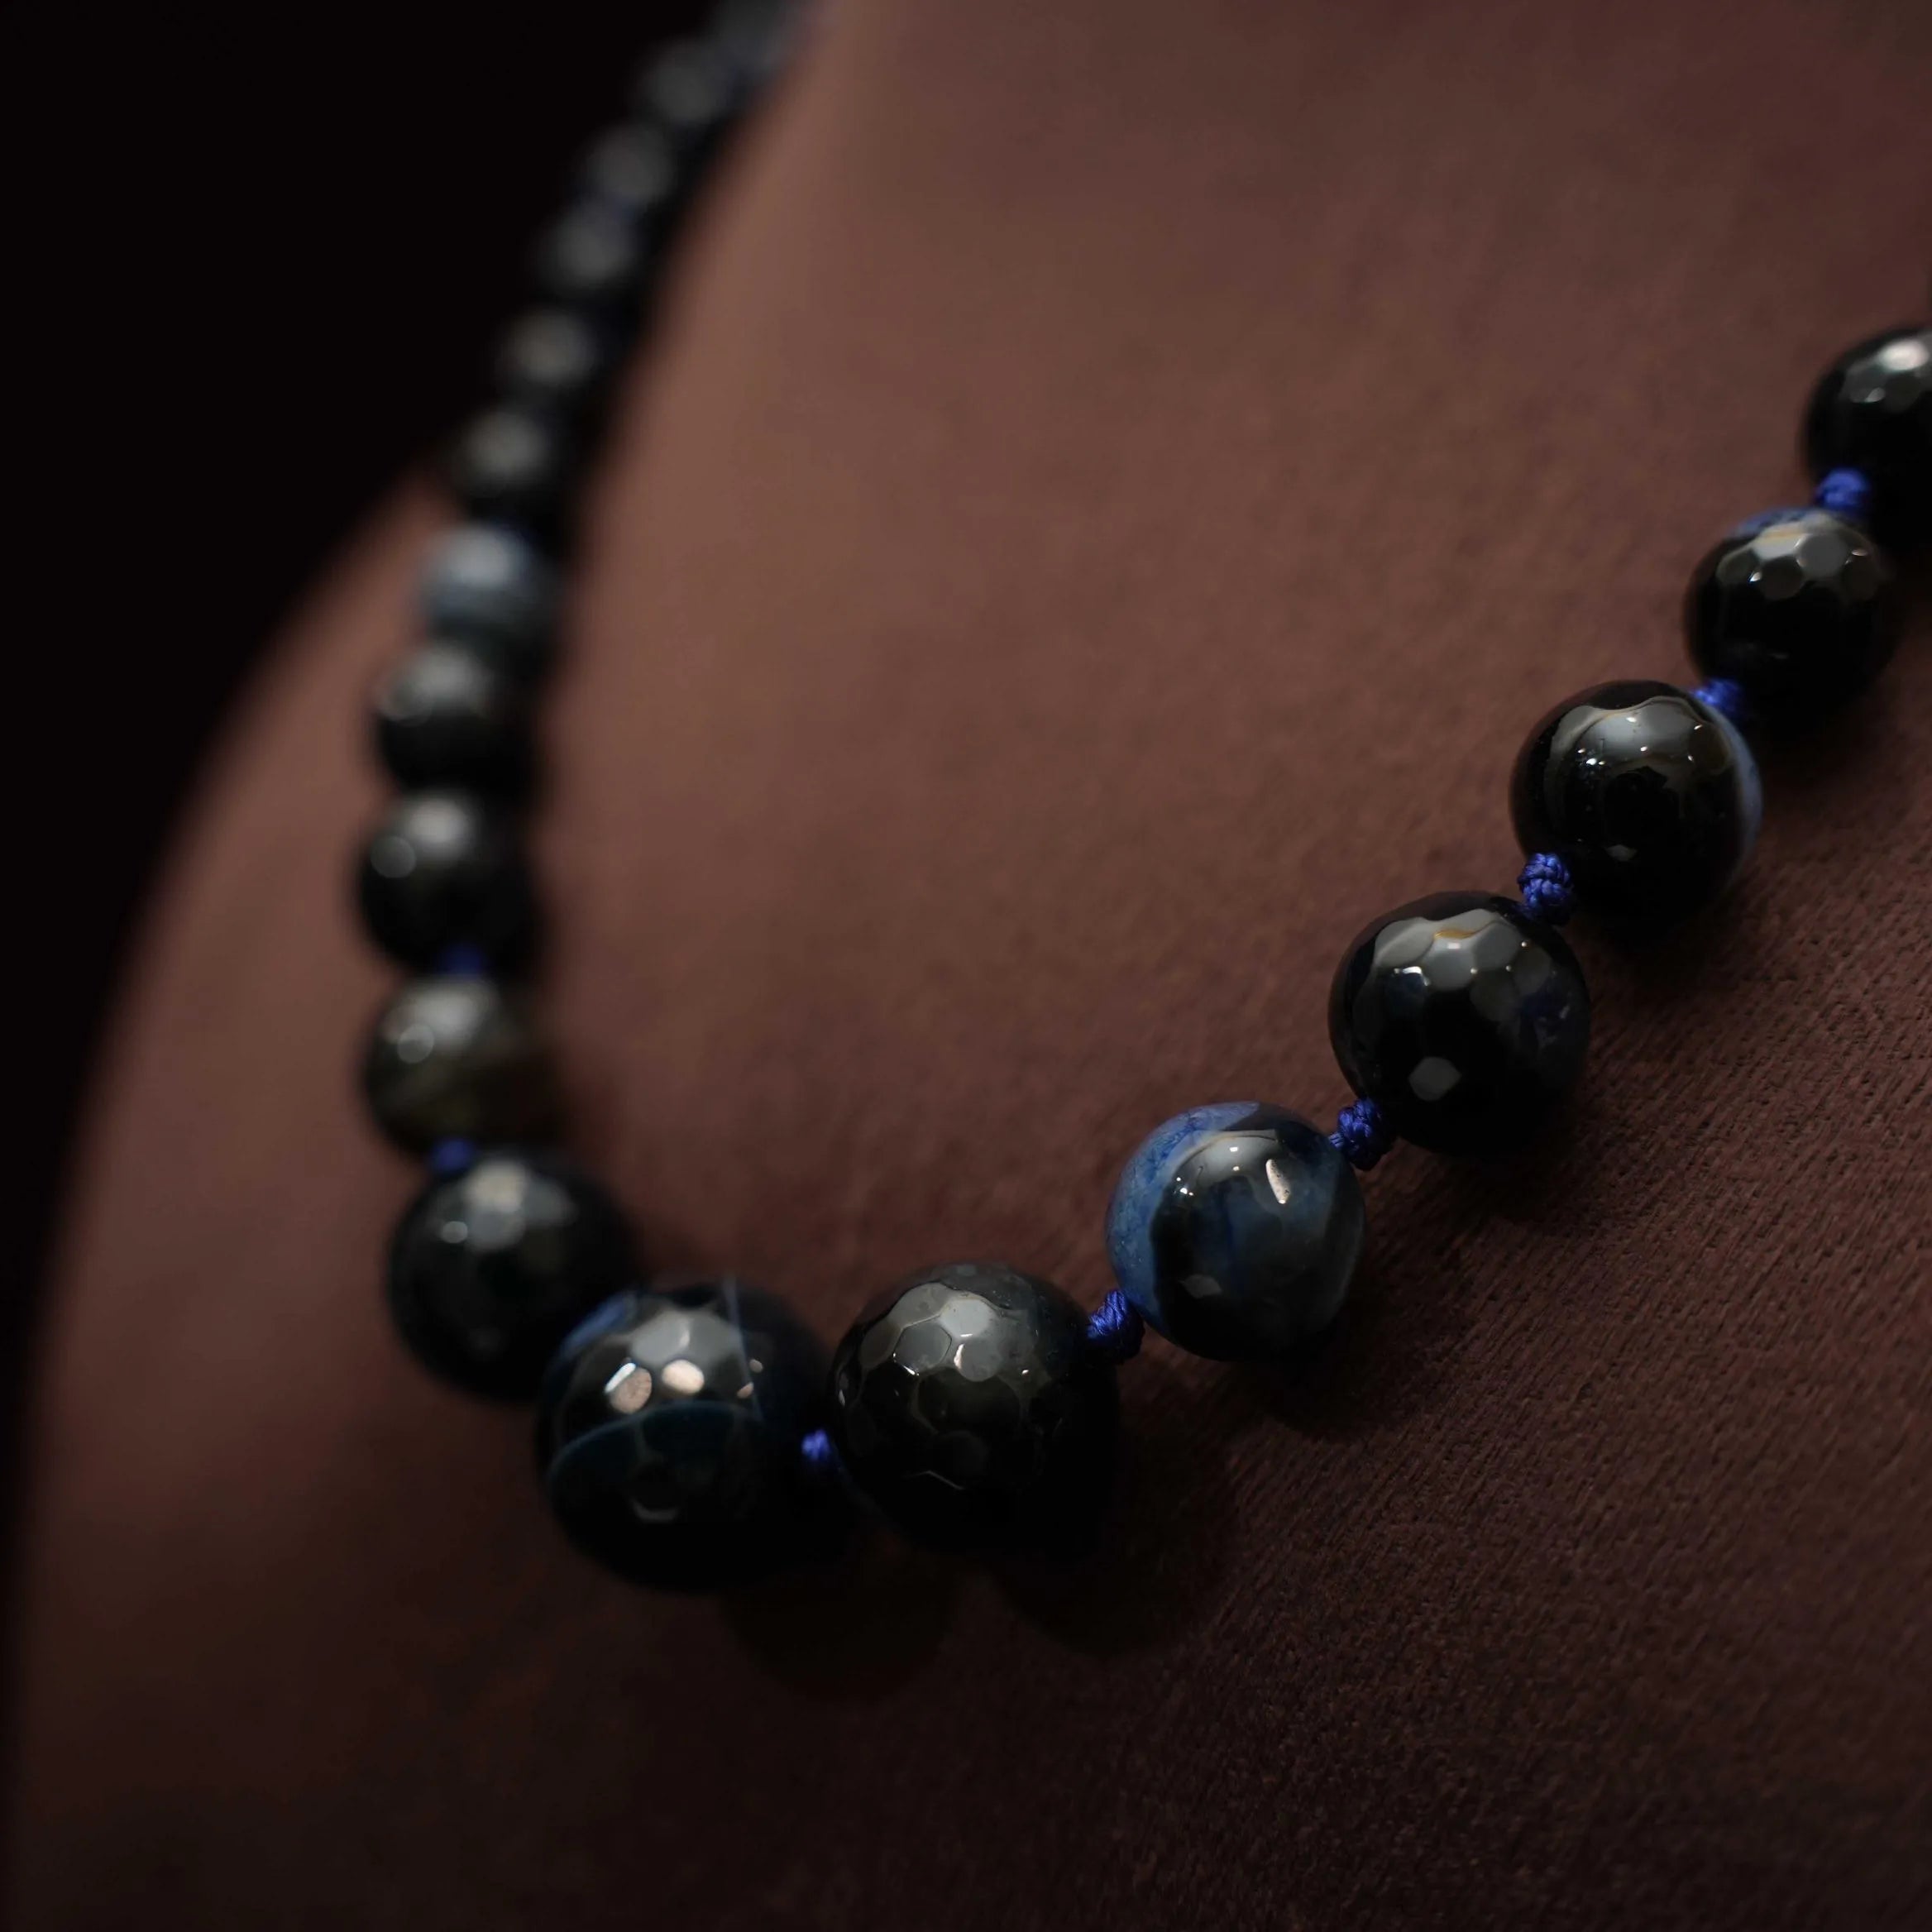 Mahi Beaded Necklace - Blue